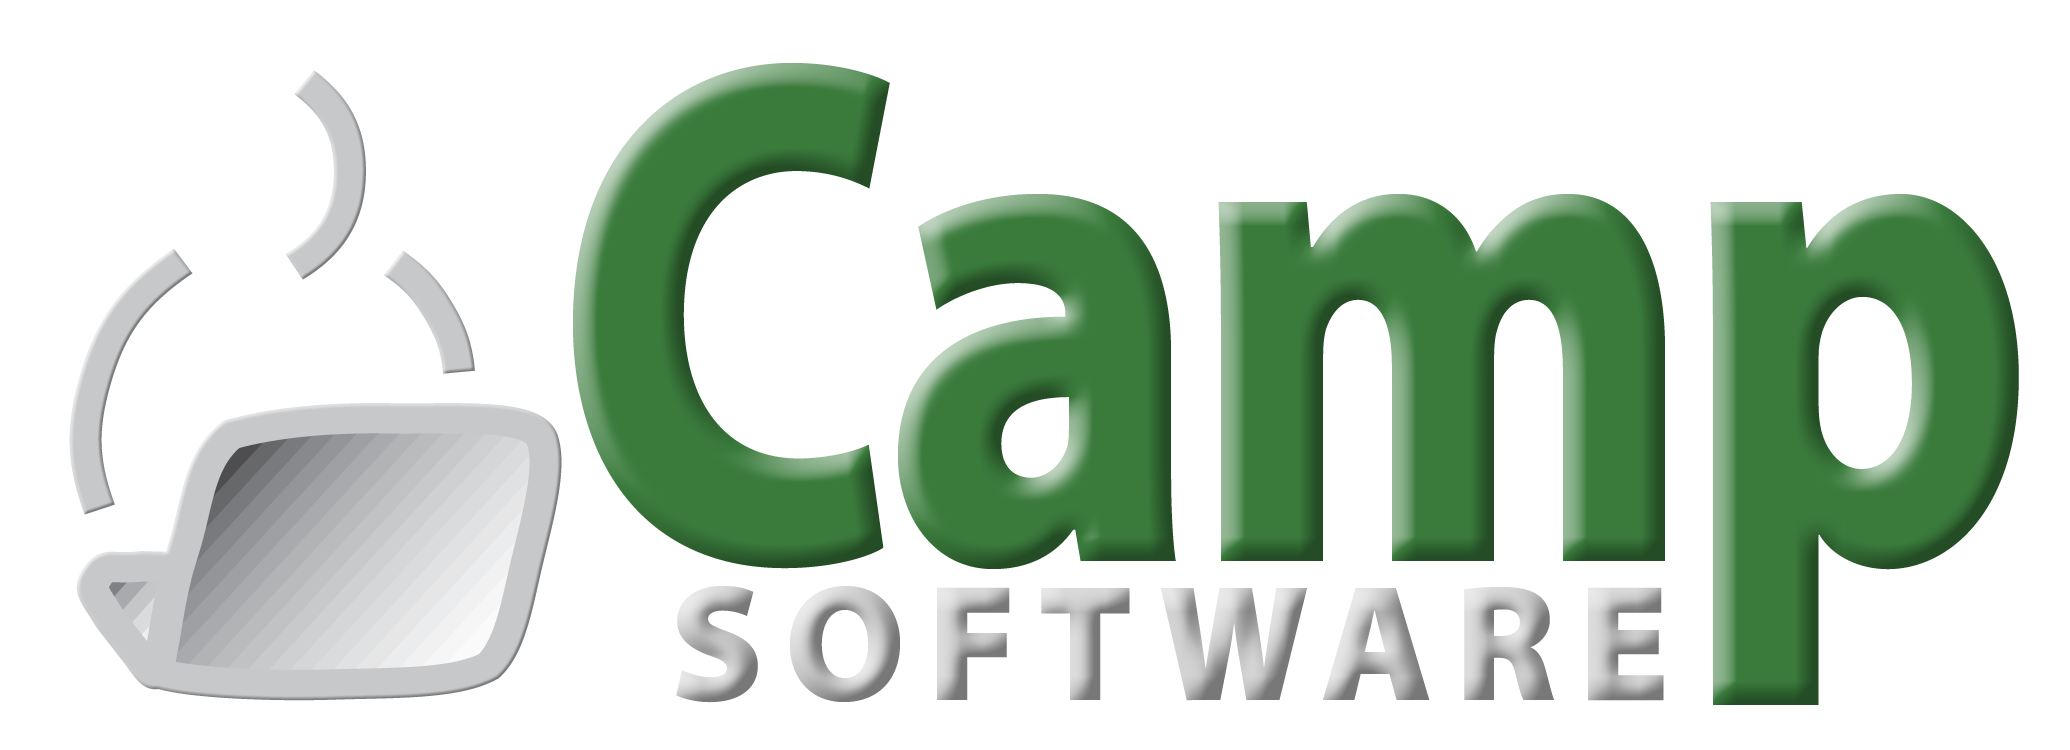 CampSoftware - Developer of Custom Database Driven Apps